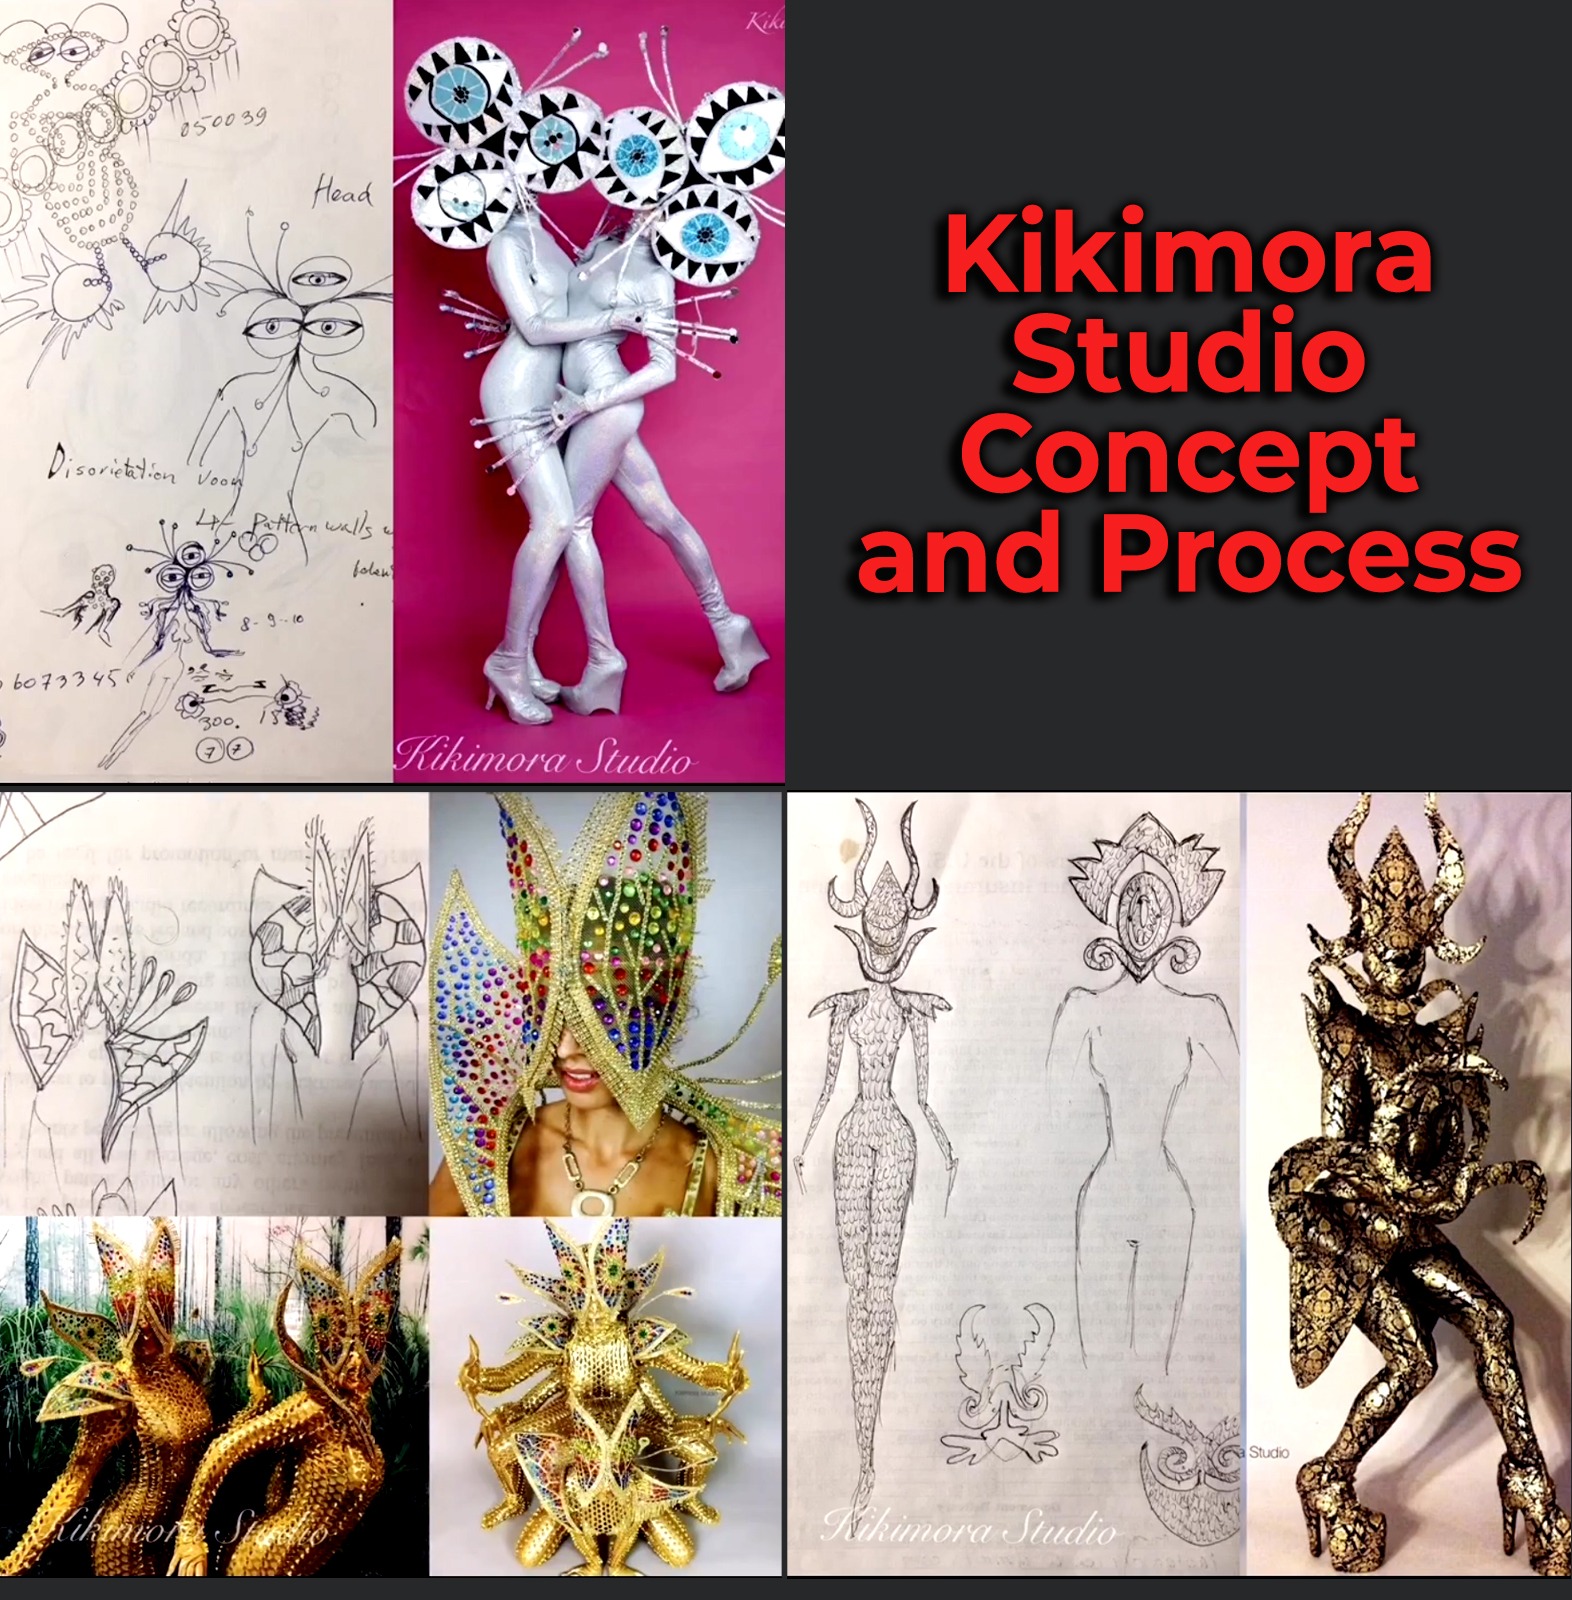 Kikimora Studio Event Entertainment Concept And Process